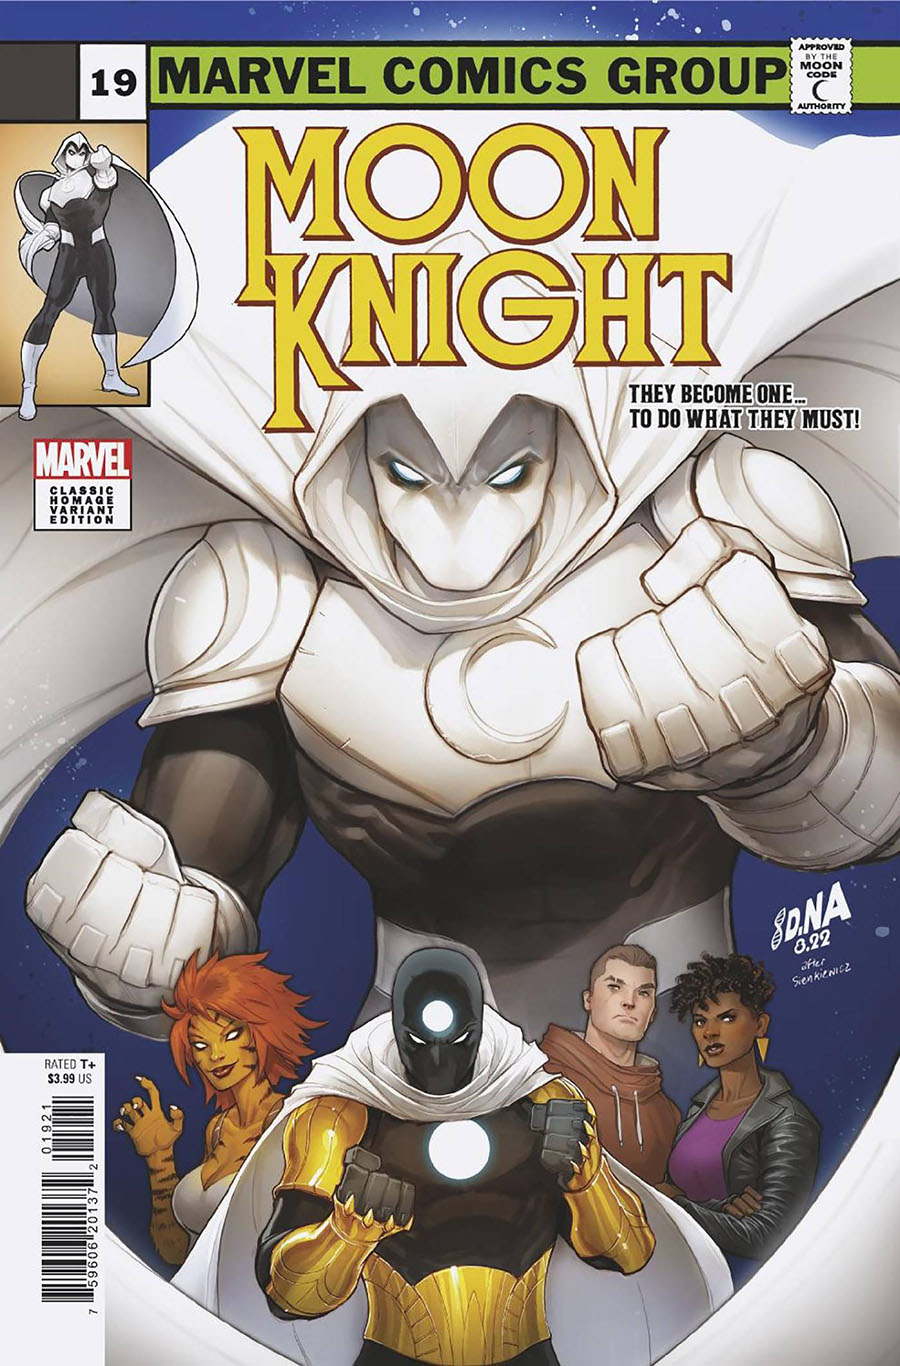 Moon Knight Issue # 29b (Marvel Comics)